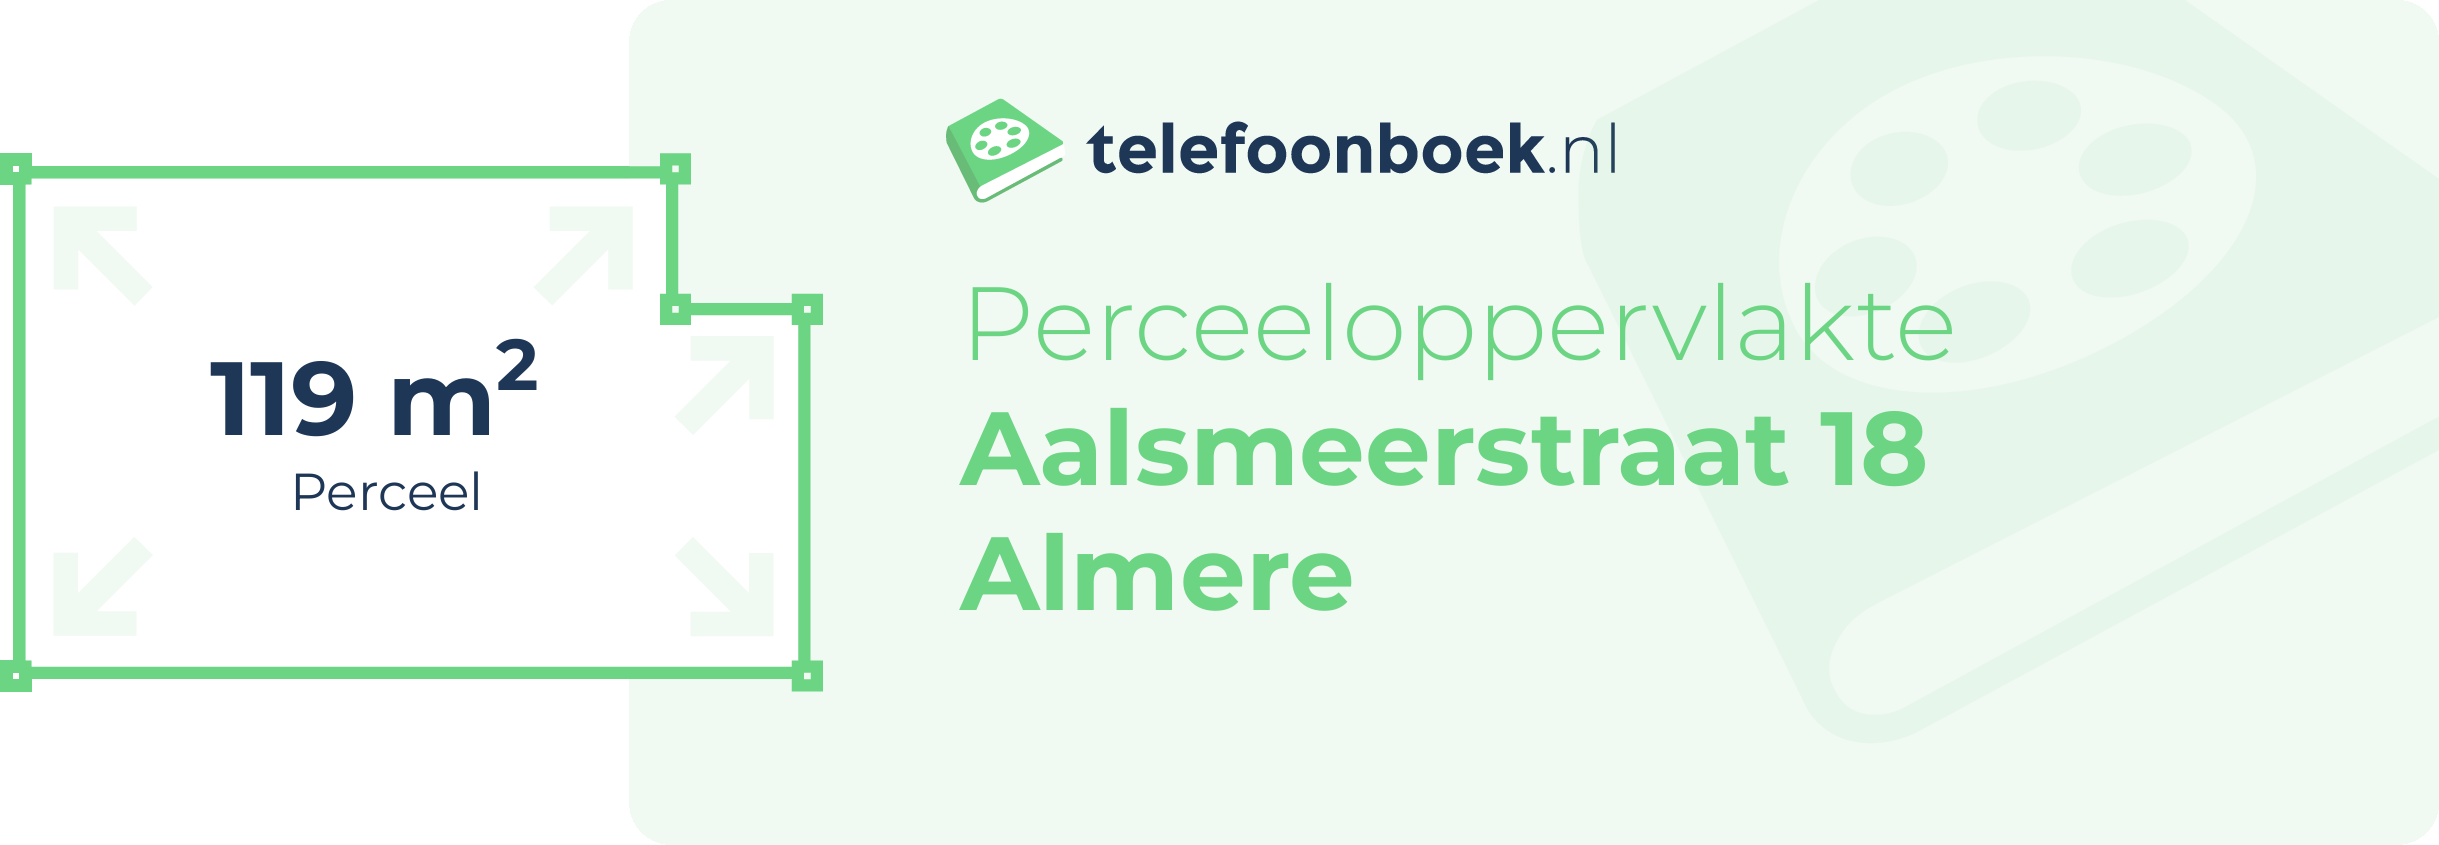 Perceeloppervlakte Aalsmeerstraat 18 Almere